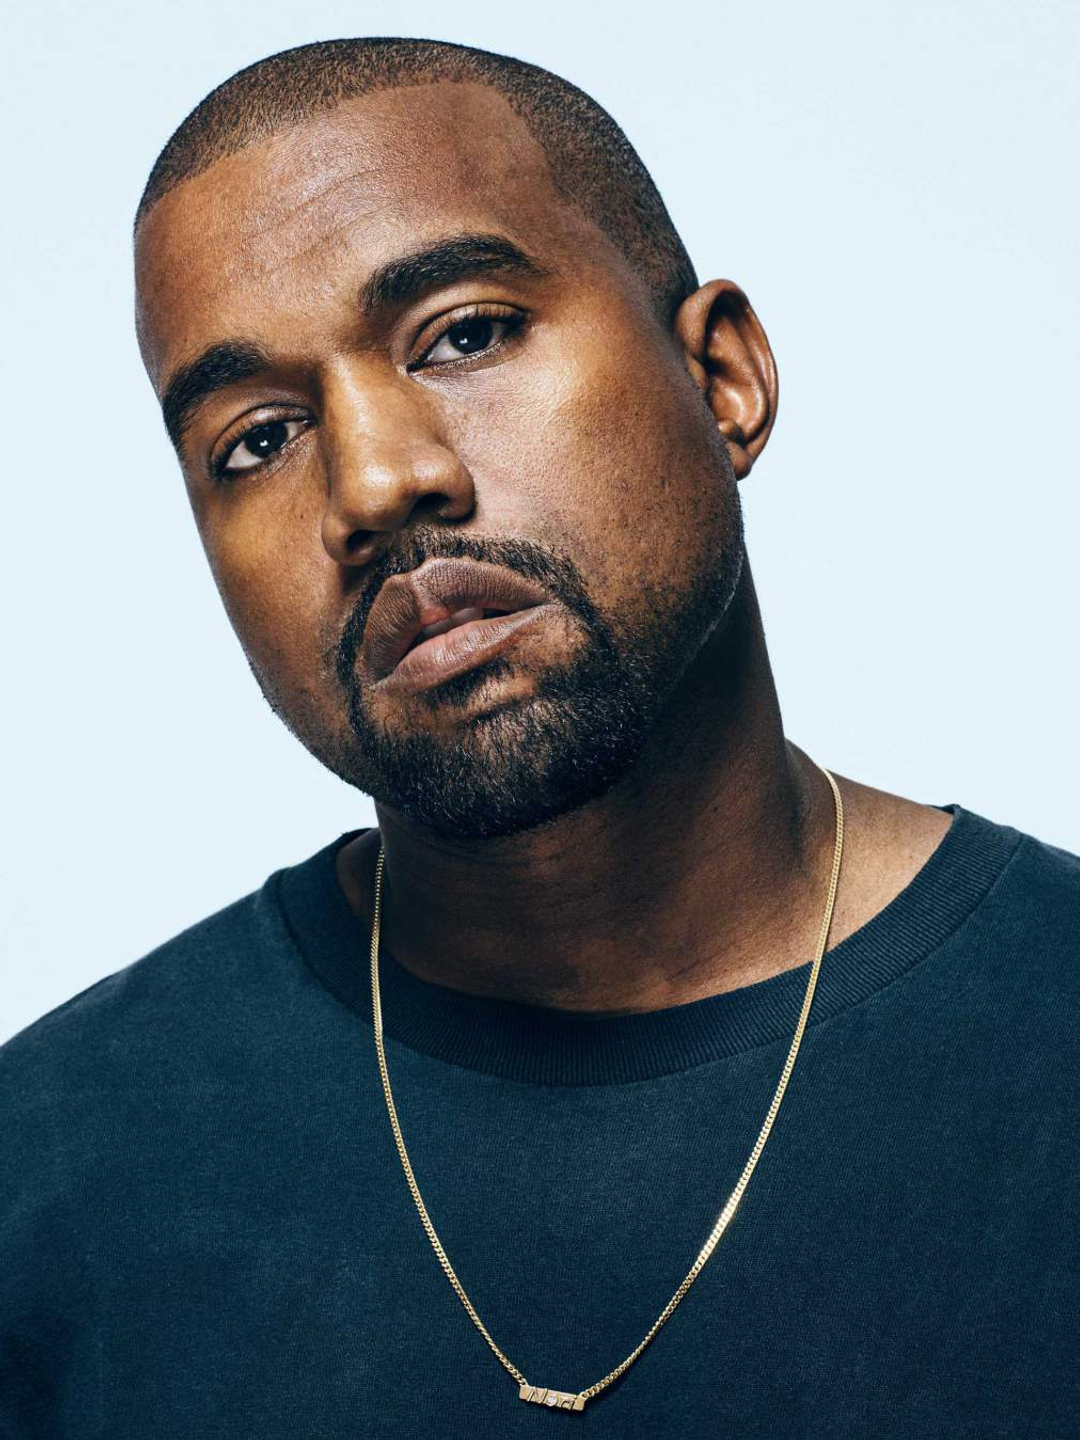 Kanye West dating history